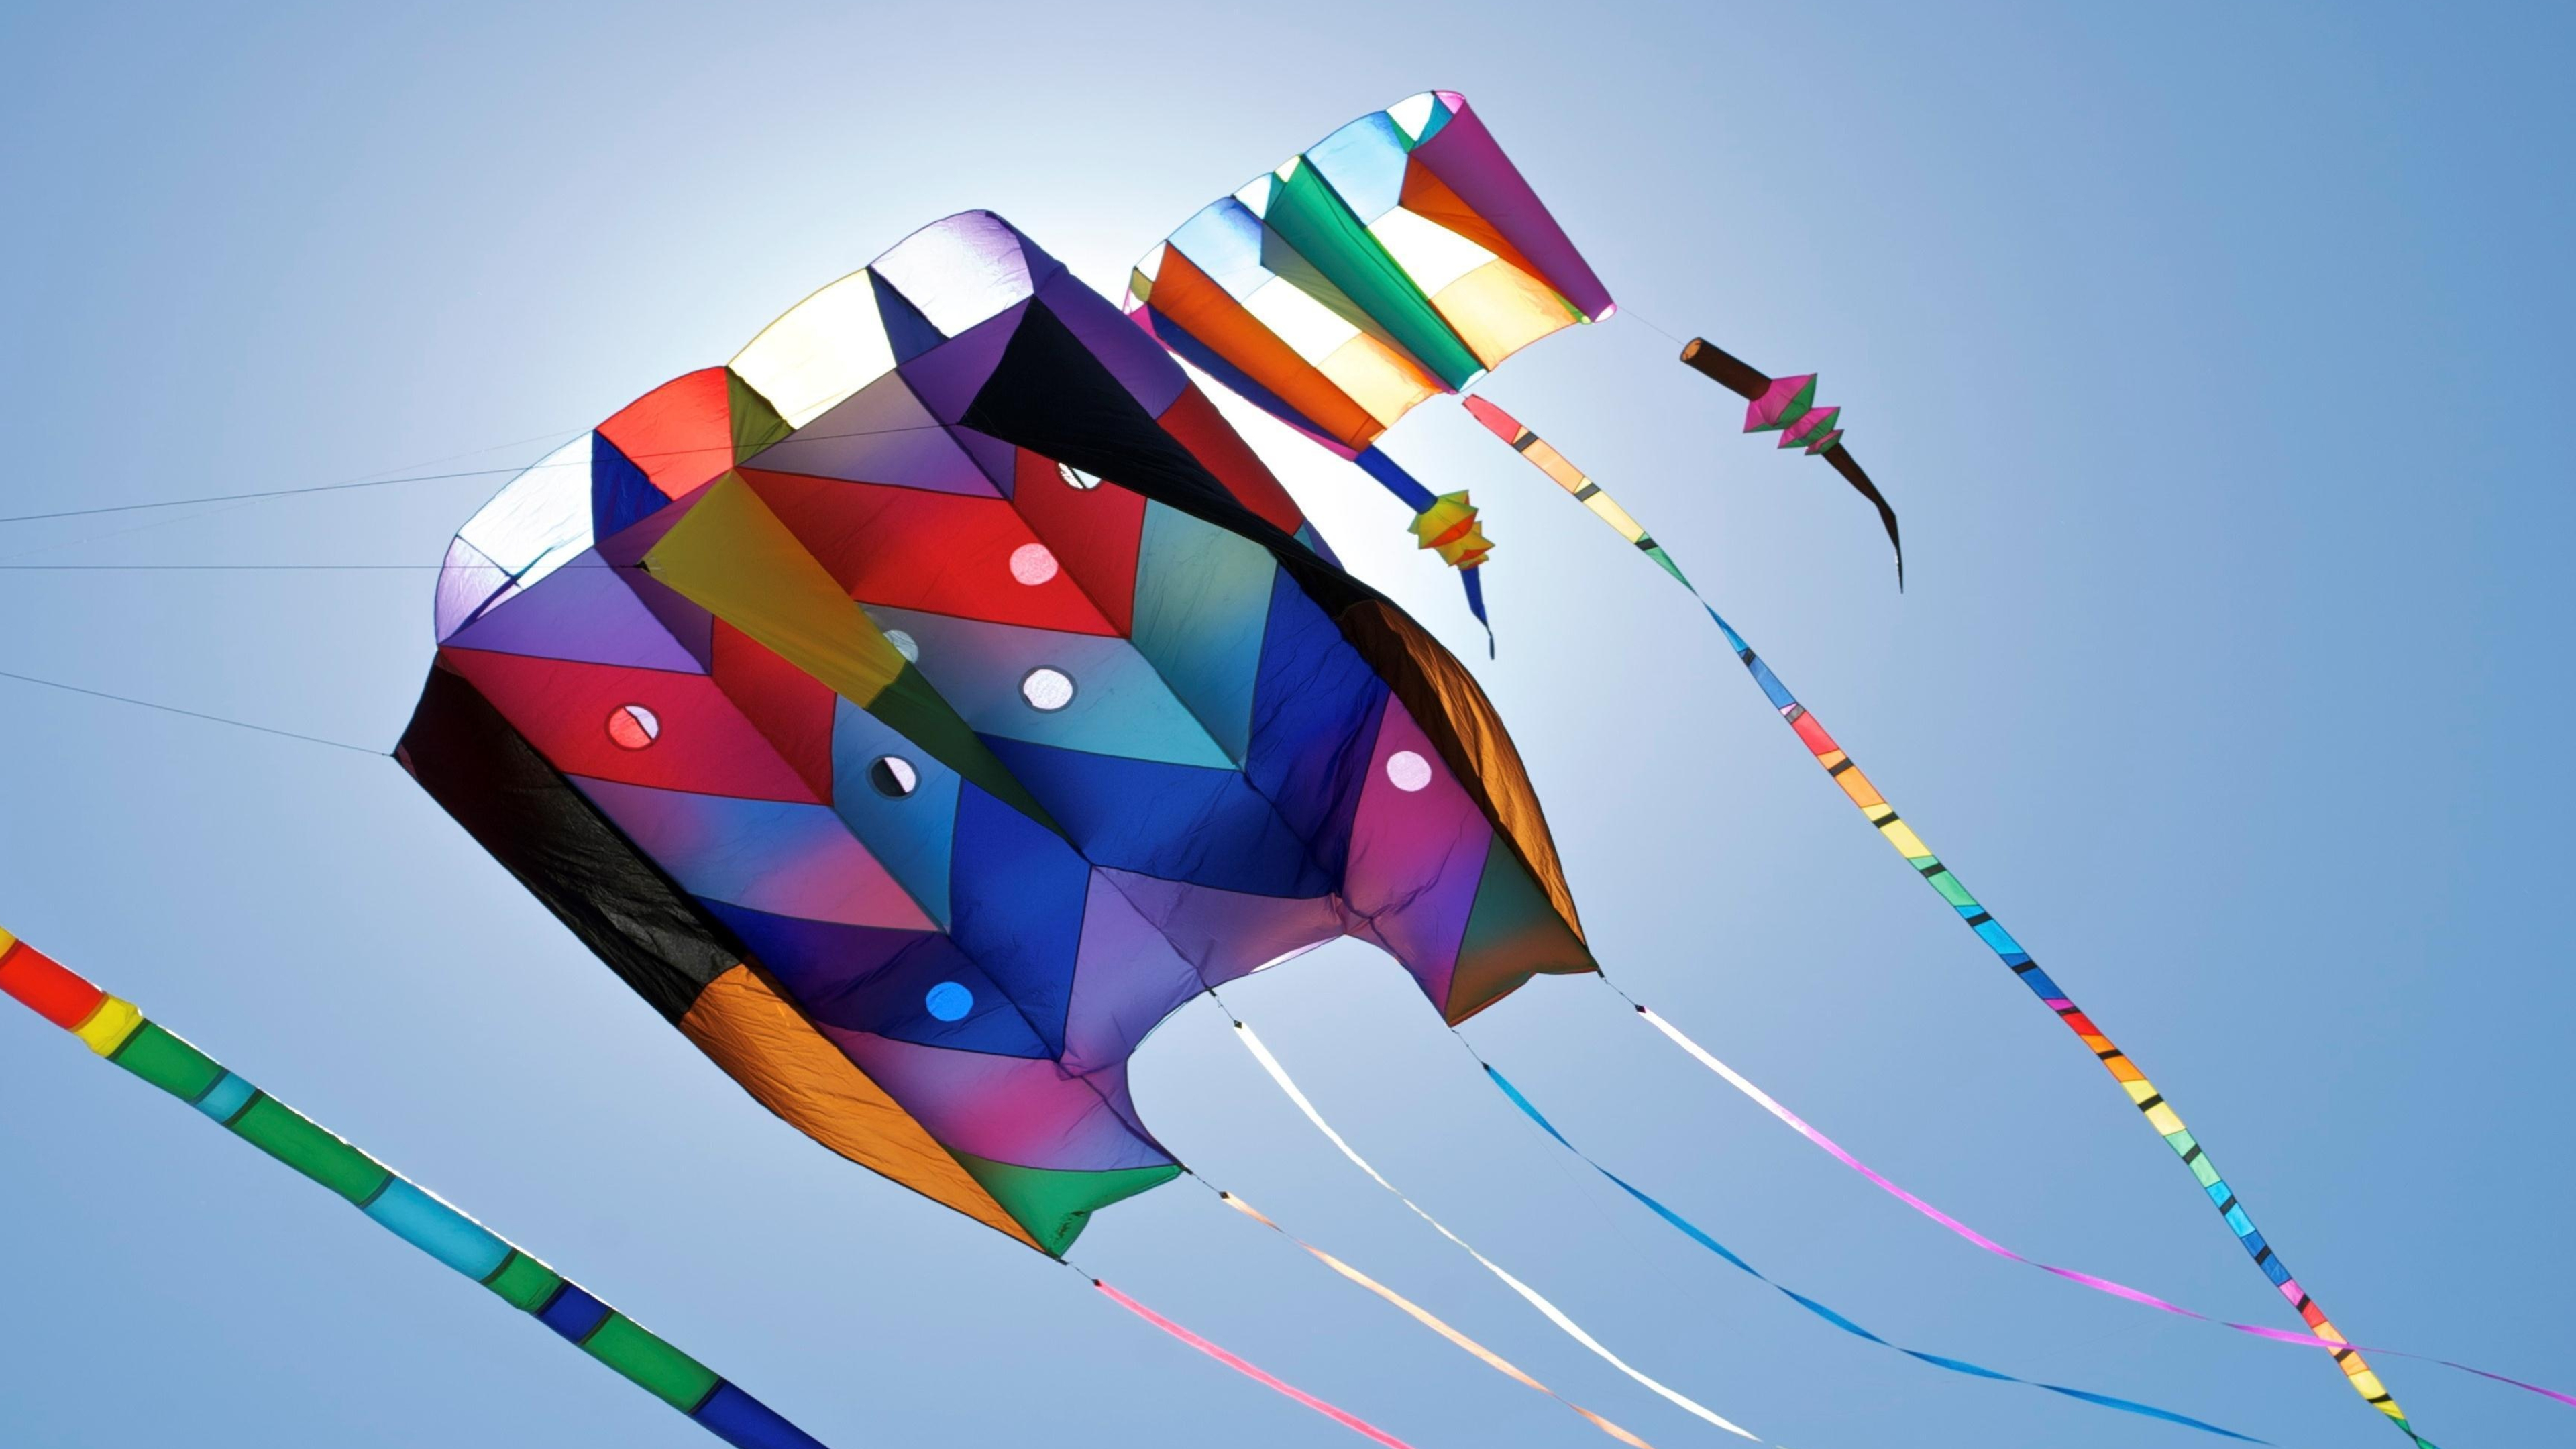 Kite Sports: A stunt kite, Maneuvered in the air, Kitesurfing, Shapes. 3840x2160 4K Wallpaper.